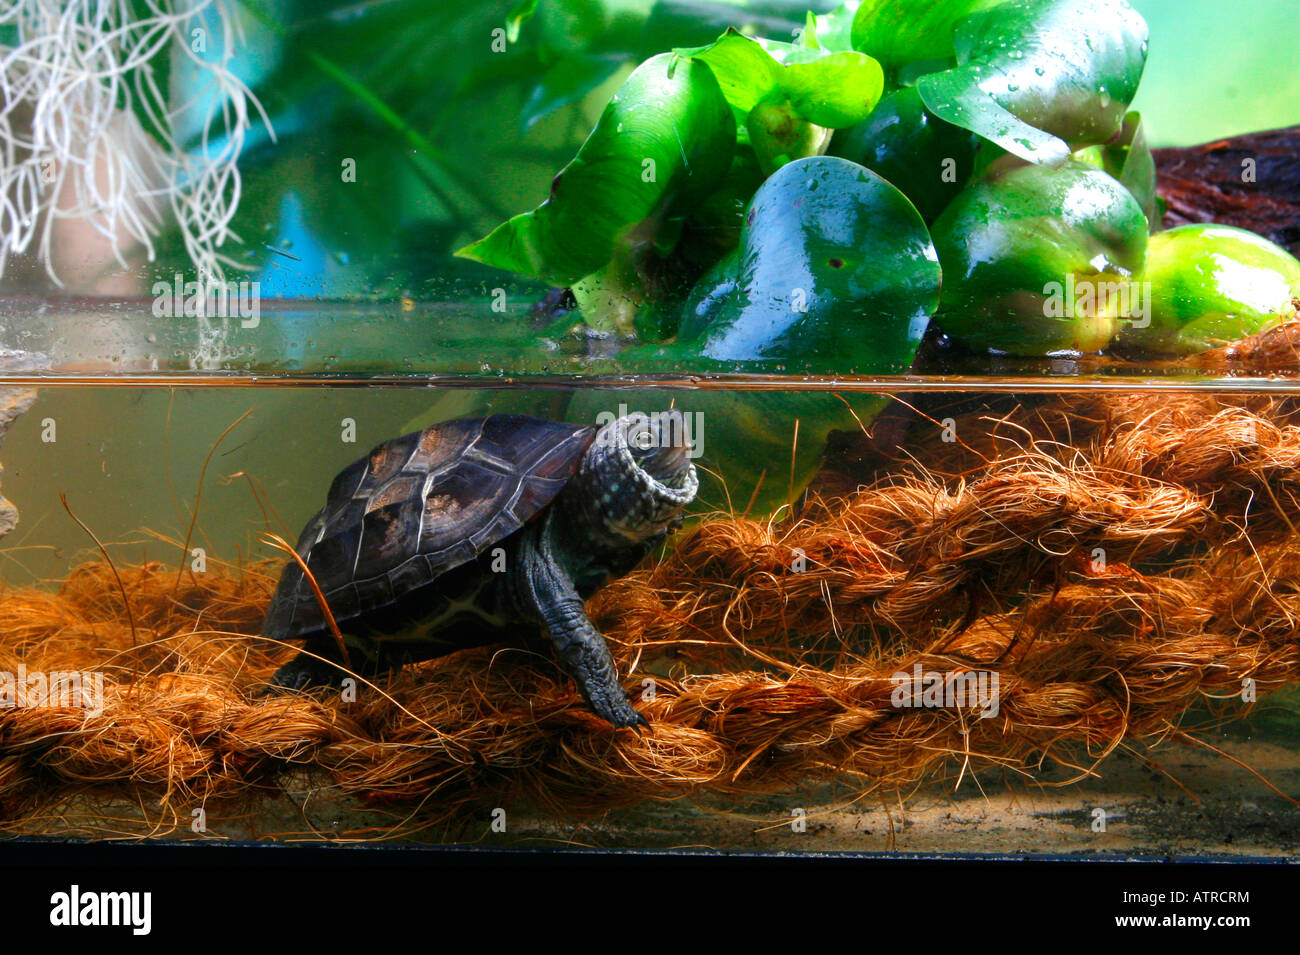 Chinese Pond Turtle Stock Photo